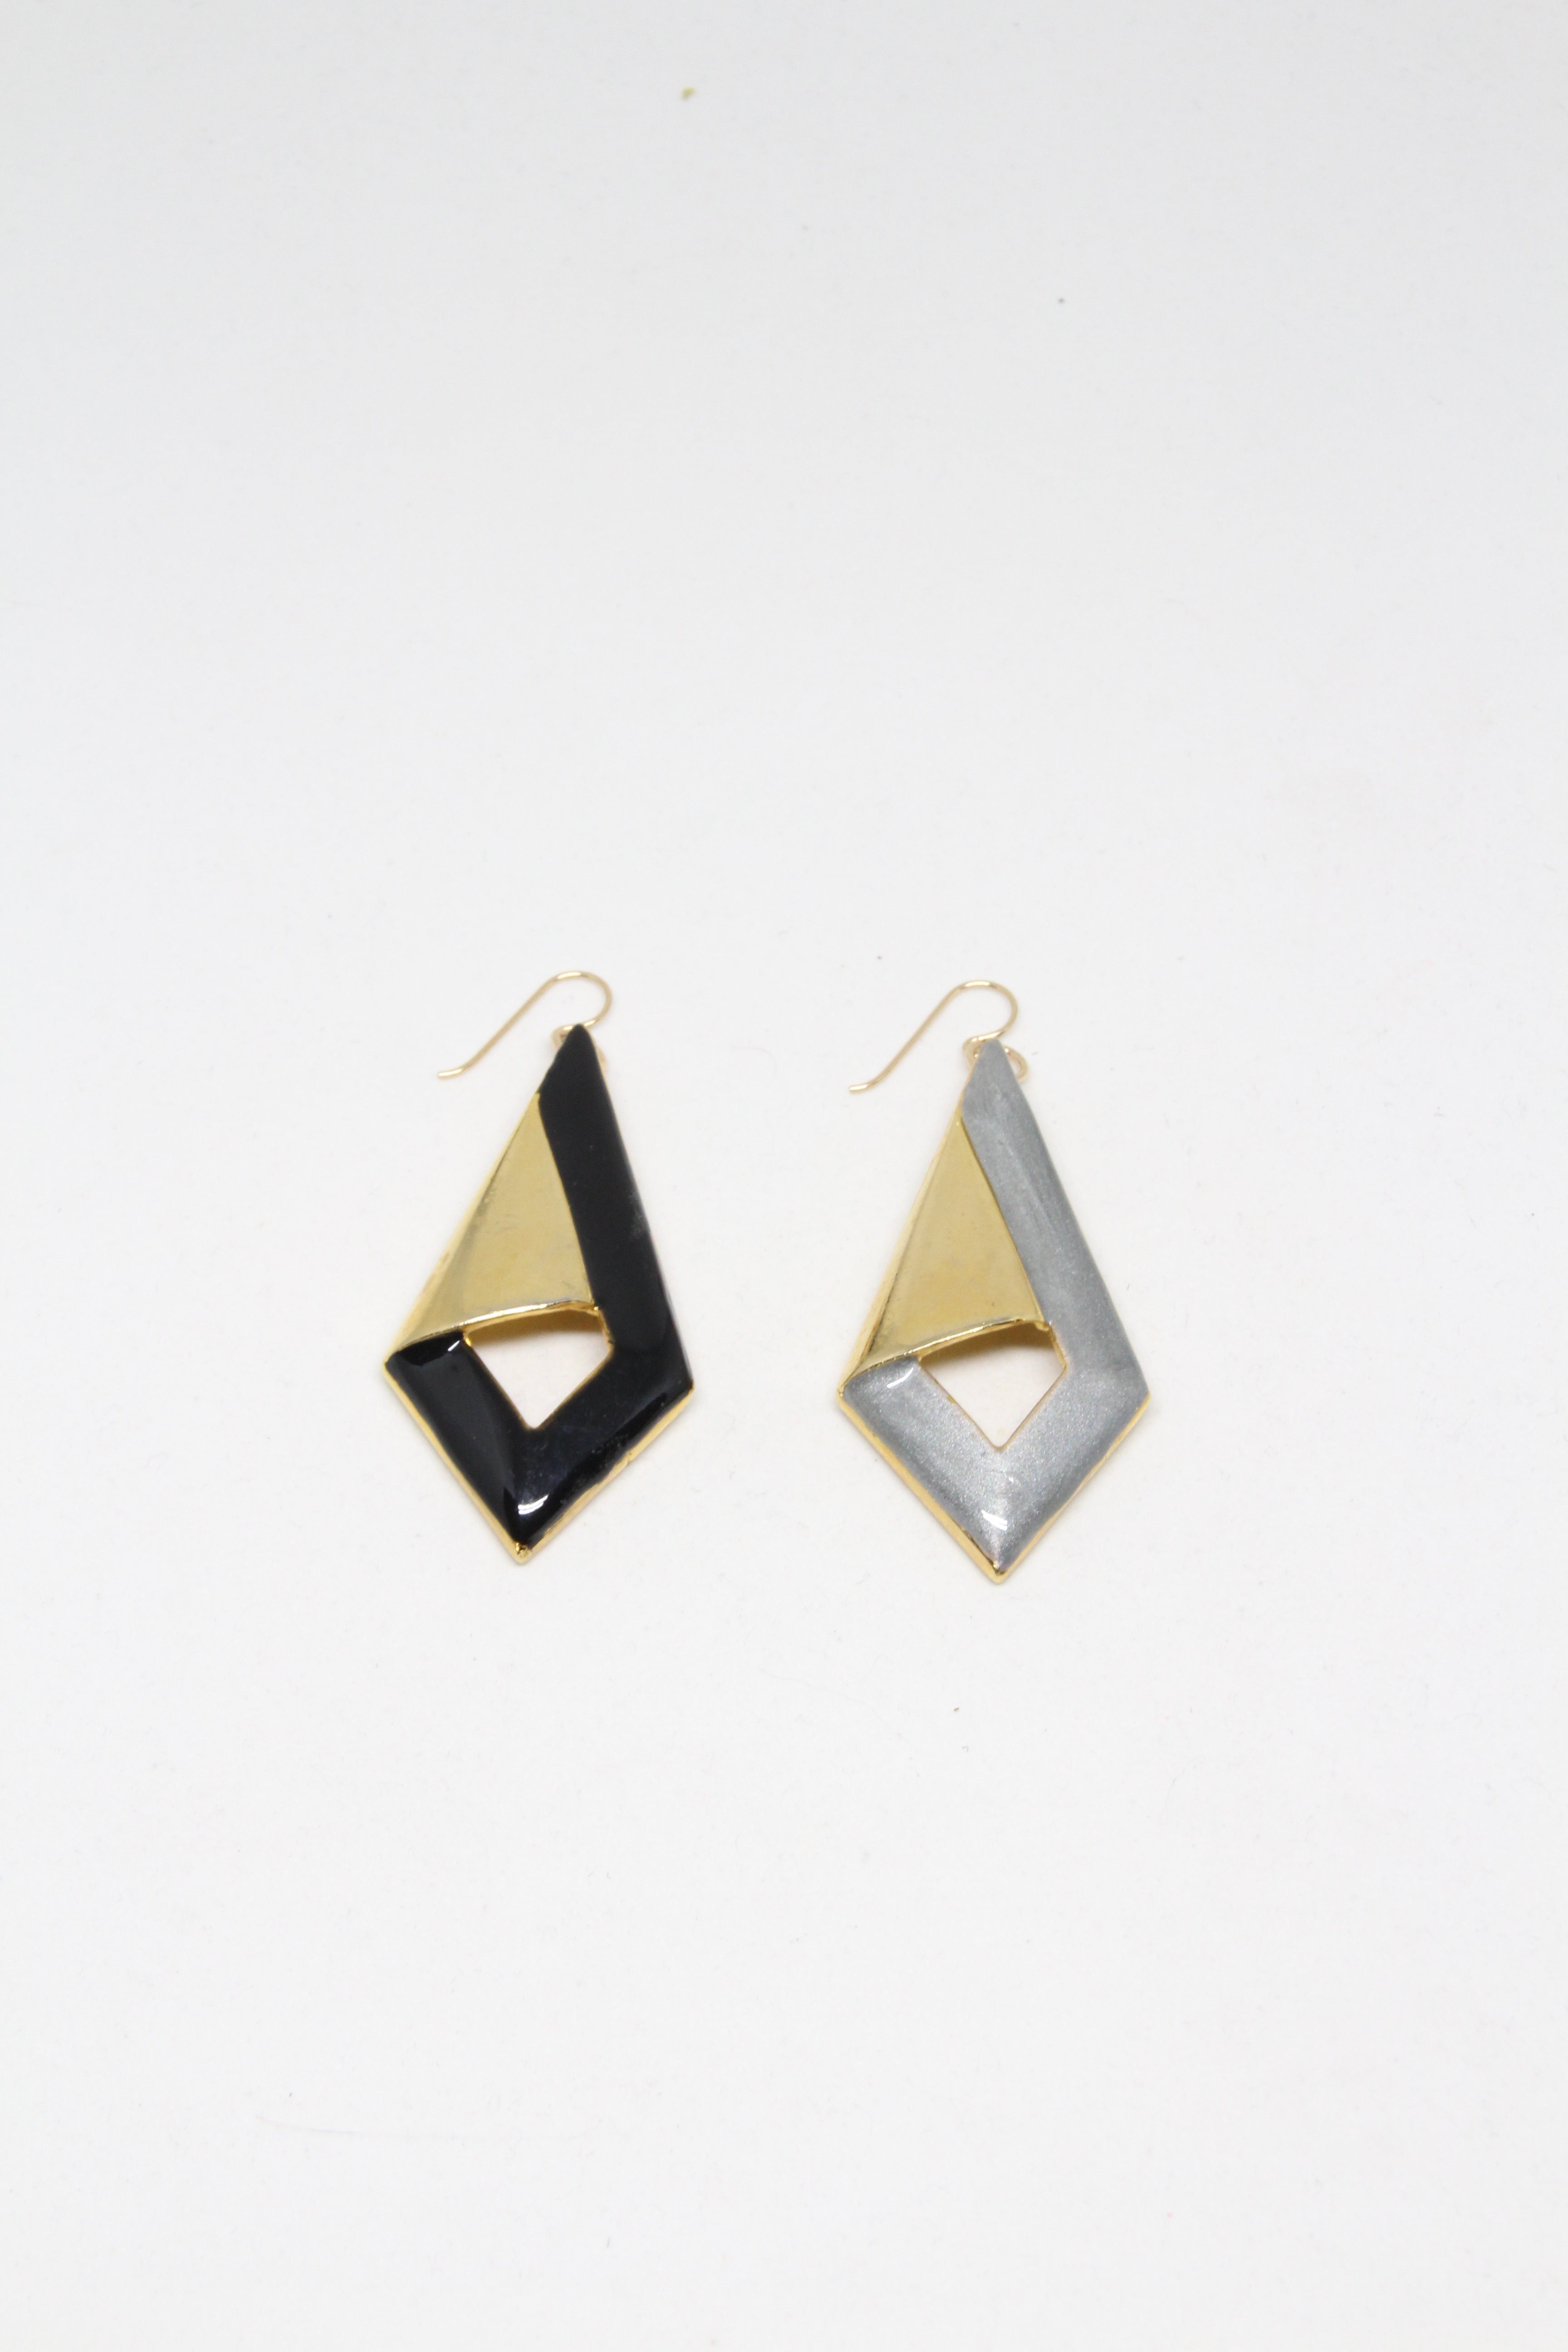 llayers-jewelry-upcycling-gold-black-enamel-earrings-009-brooklyn-newyork-F4